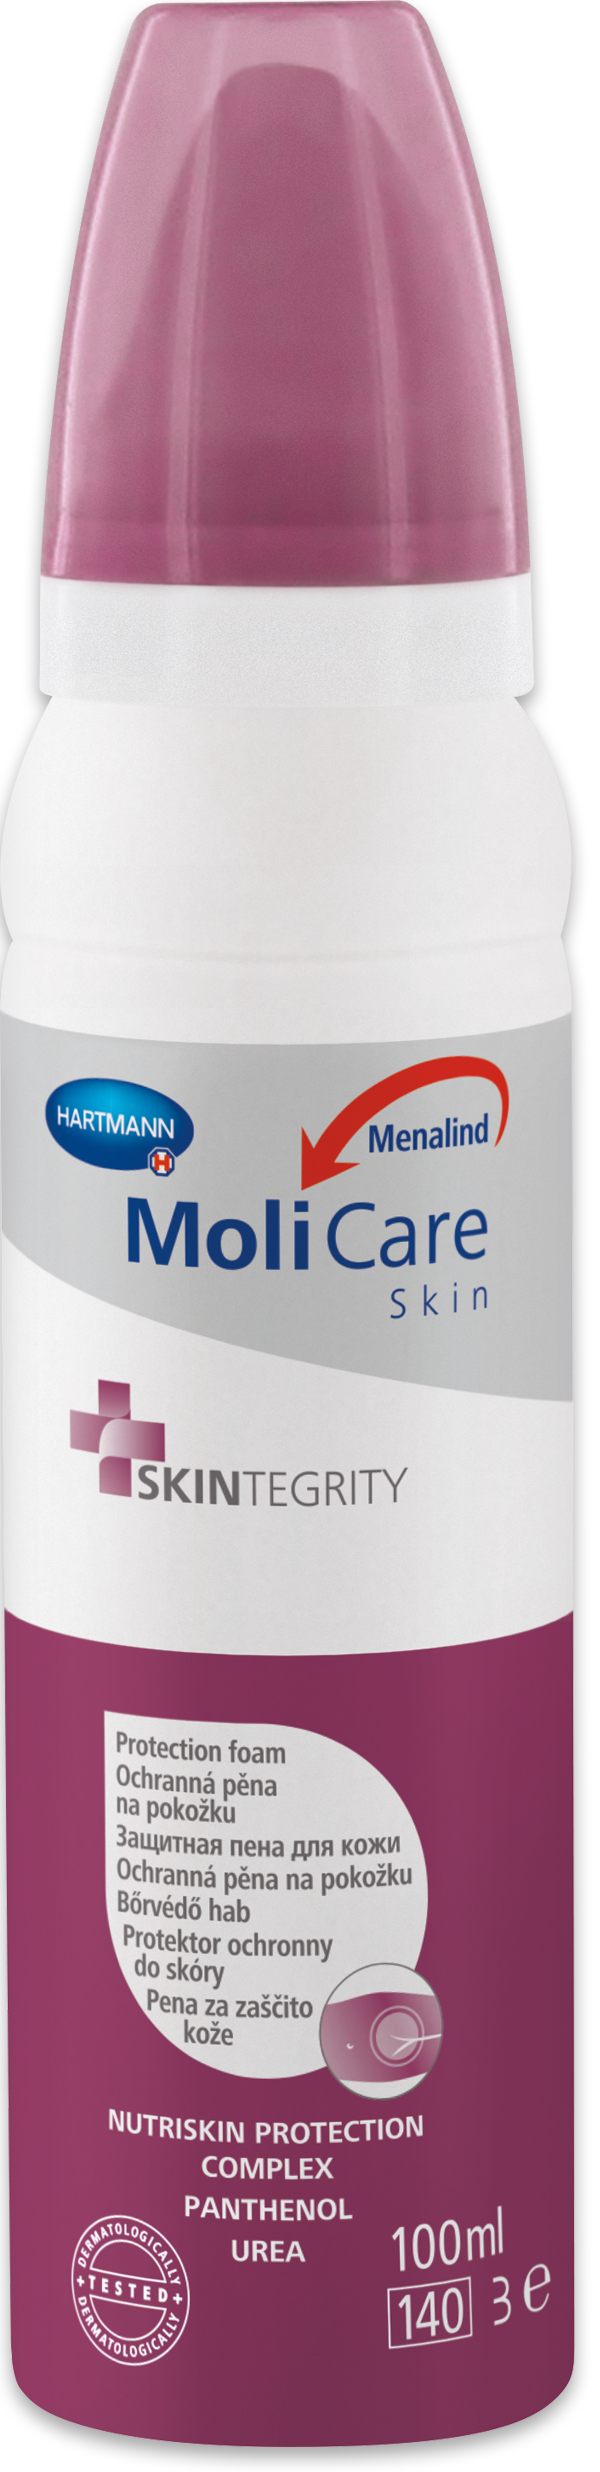 MoliCare® Skin Protect - Protection Foam